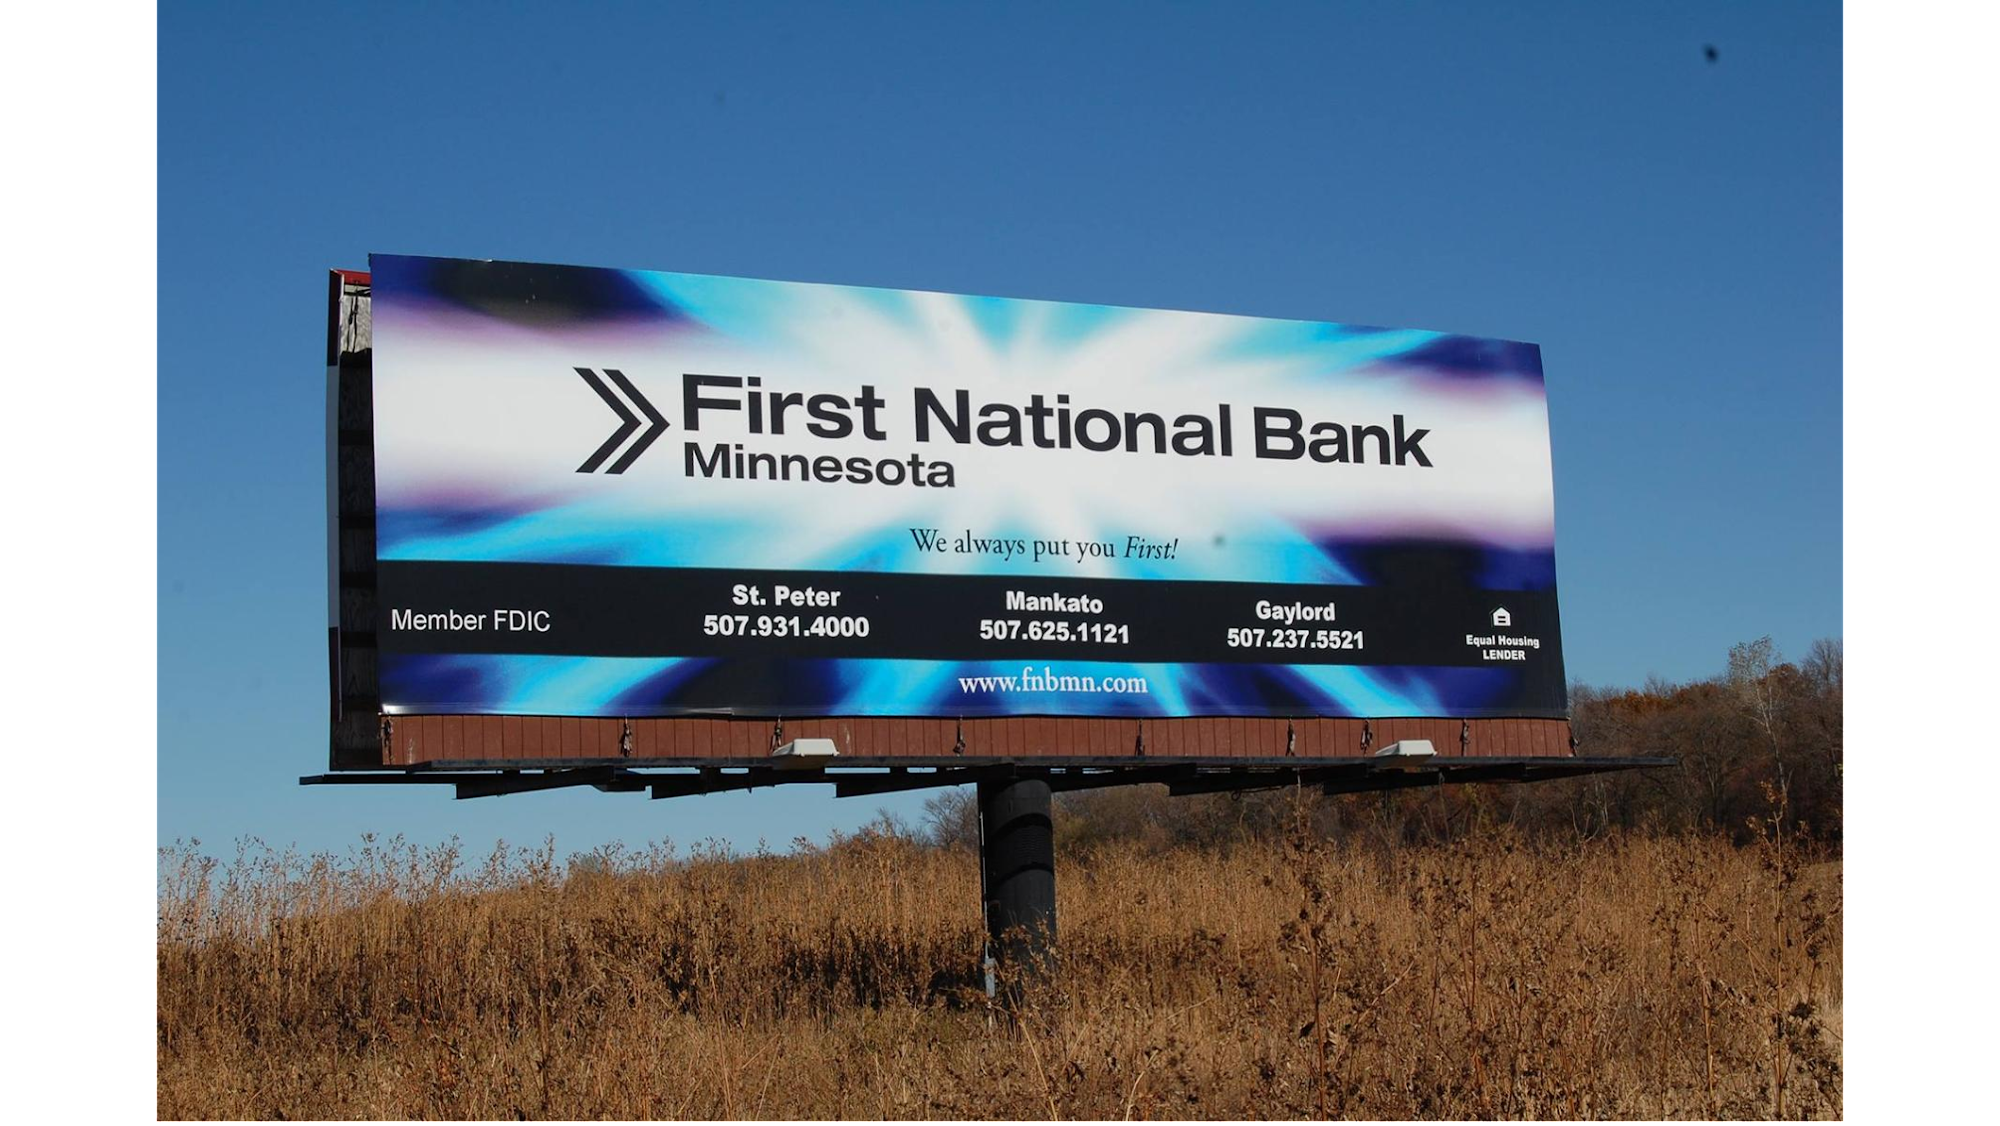 First National Bank Minnesota